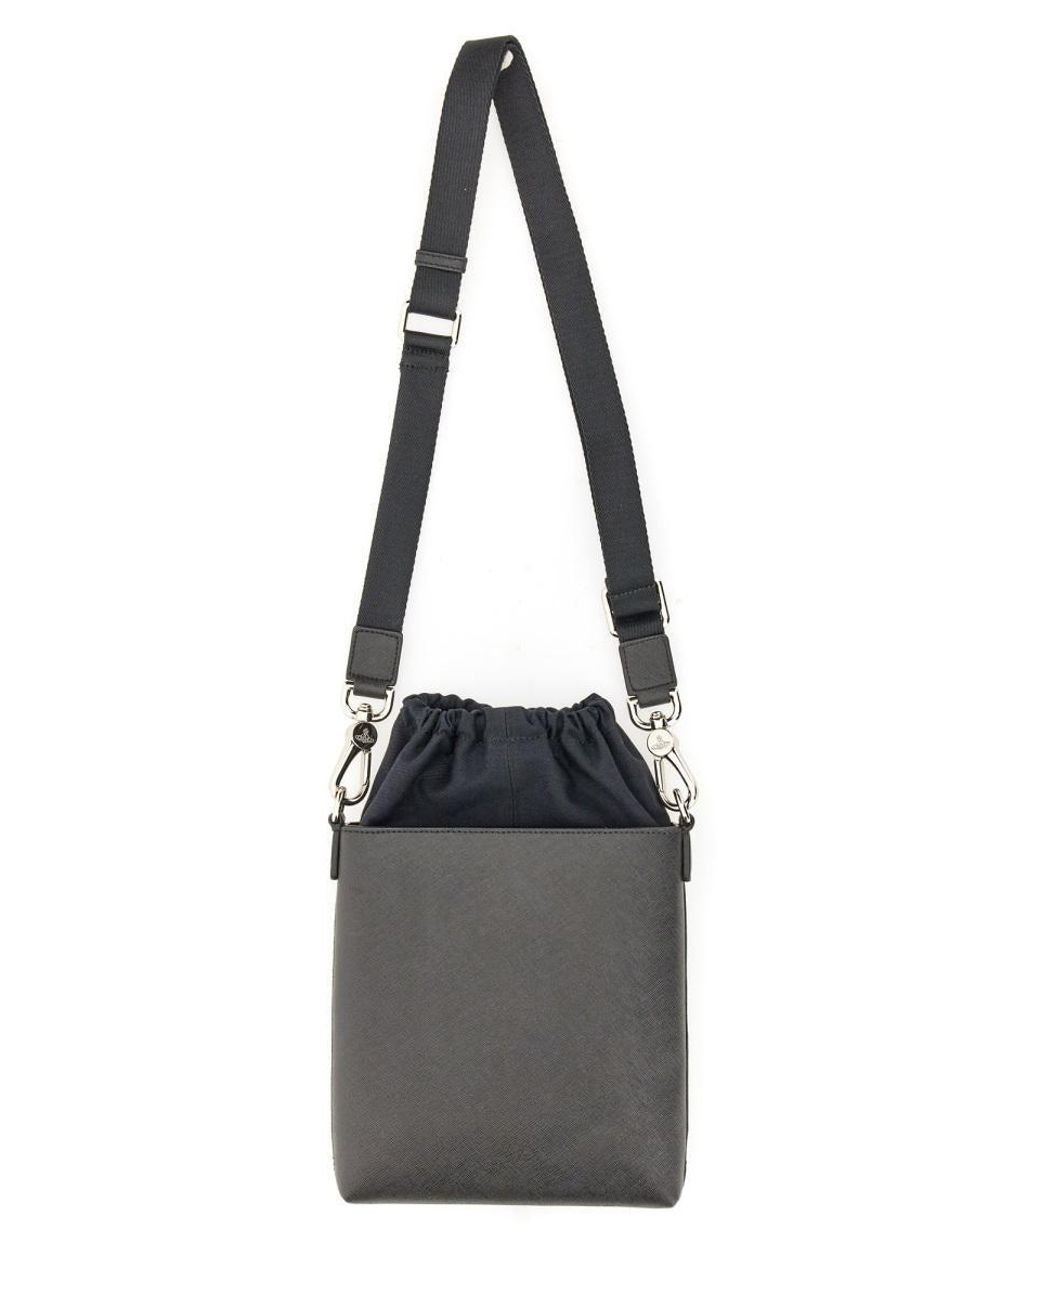 Vivienne Westwood Saffiano Leather Shoulder Bag in Black | Lyst Australia